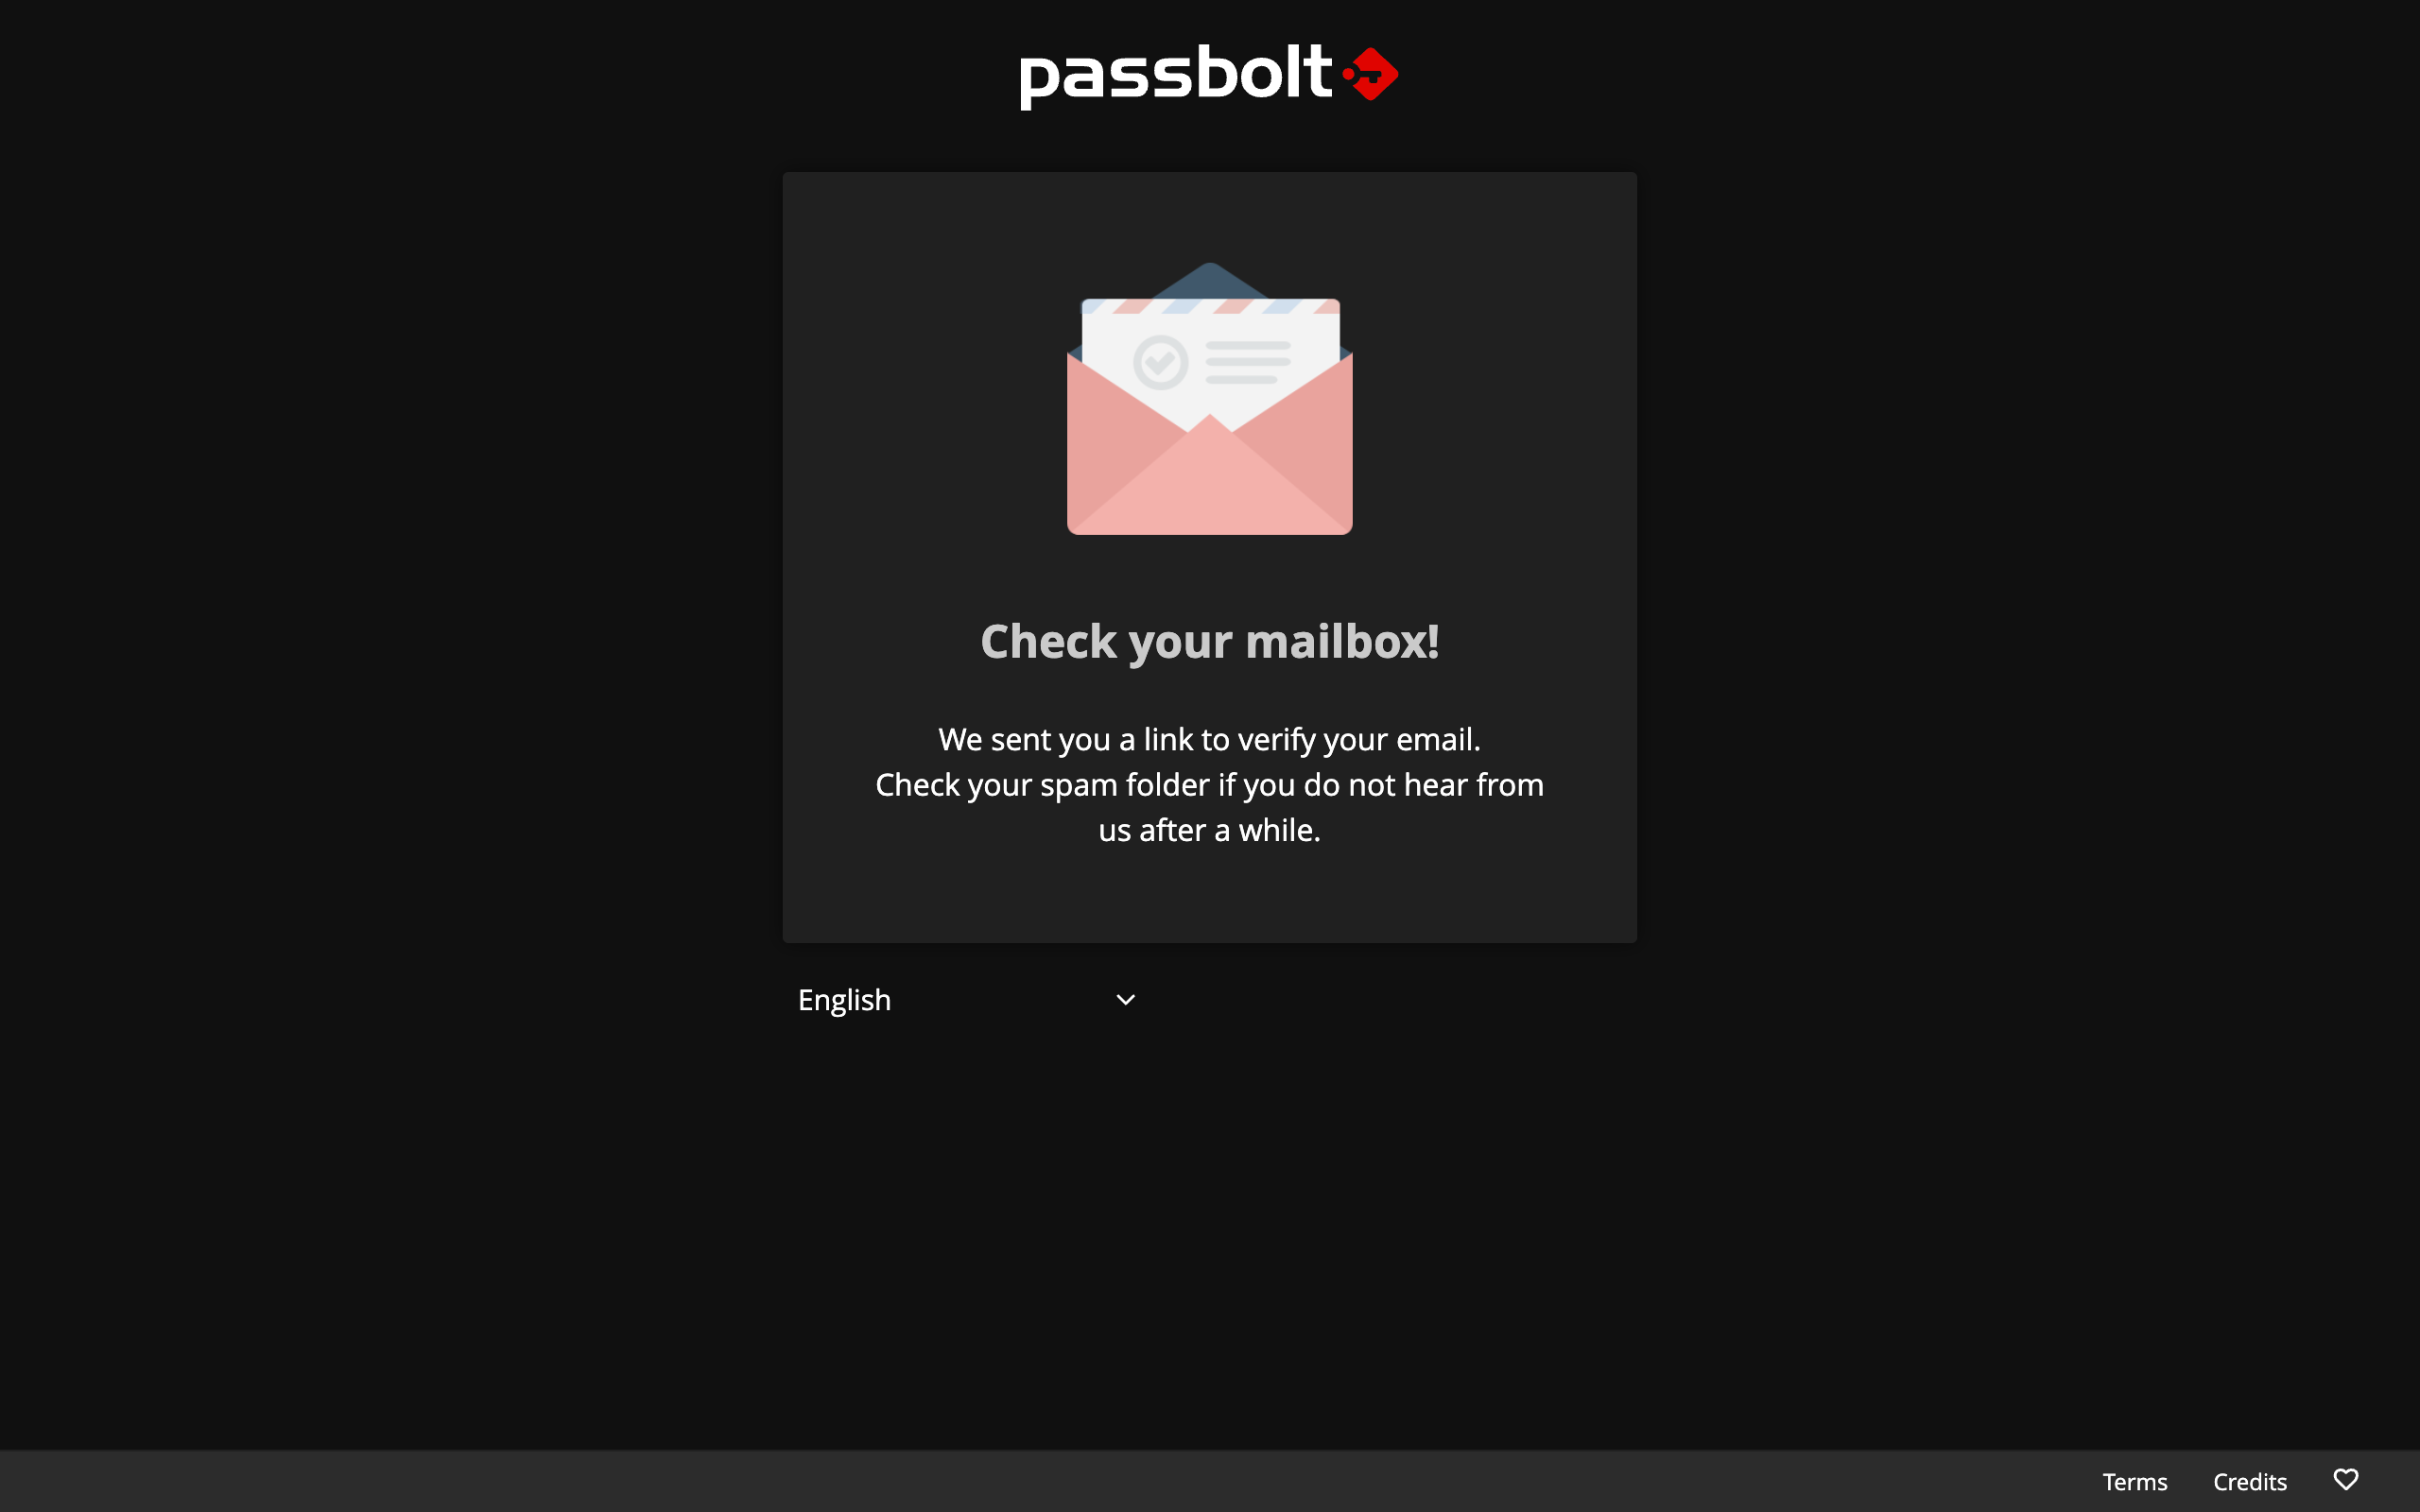 User setup - Enter your email